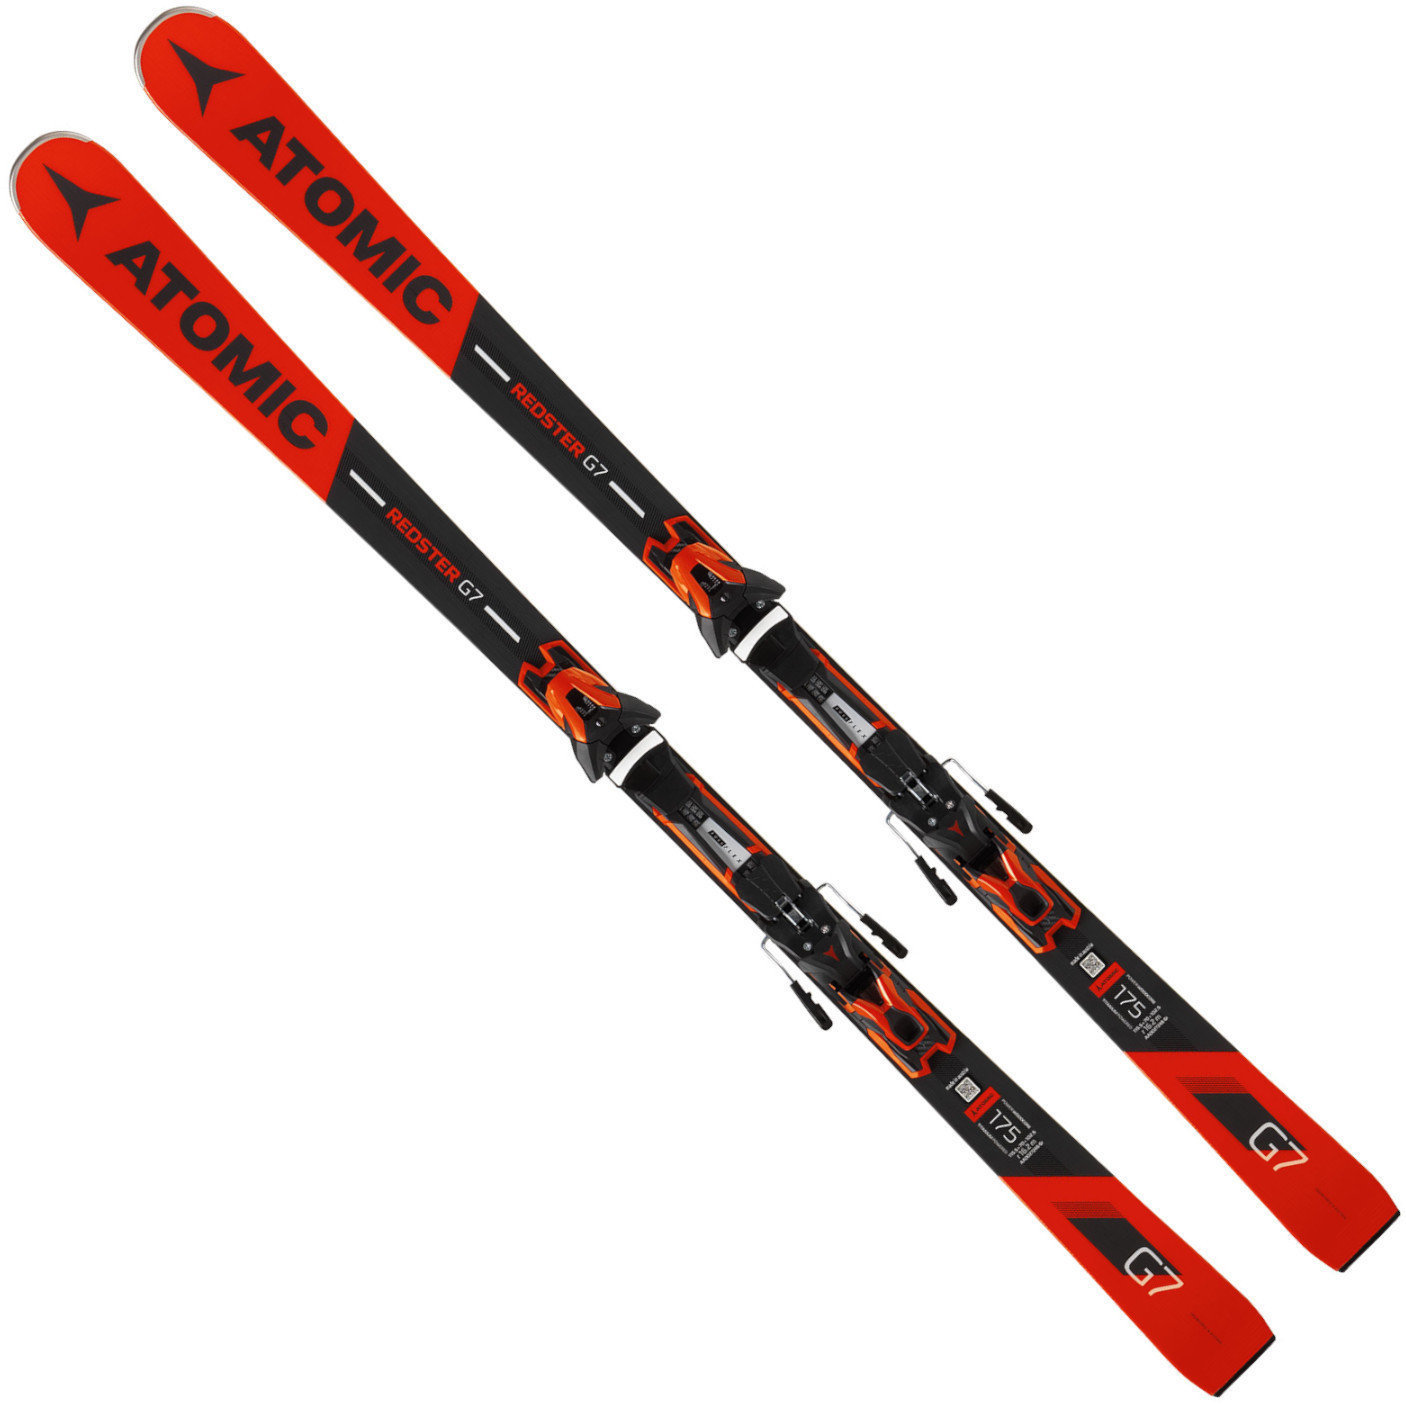 Esquis Atomic Redster G7 + FT 12 GW 175 18/19 skis